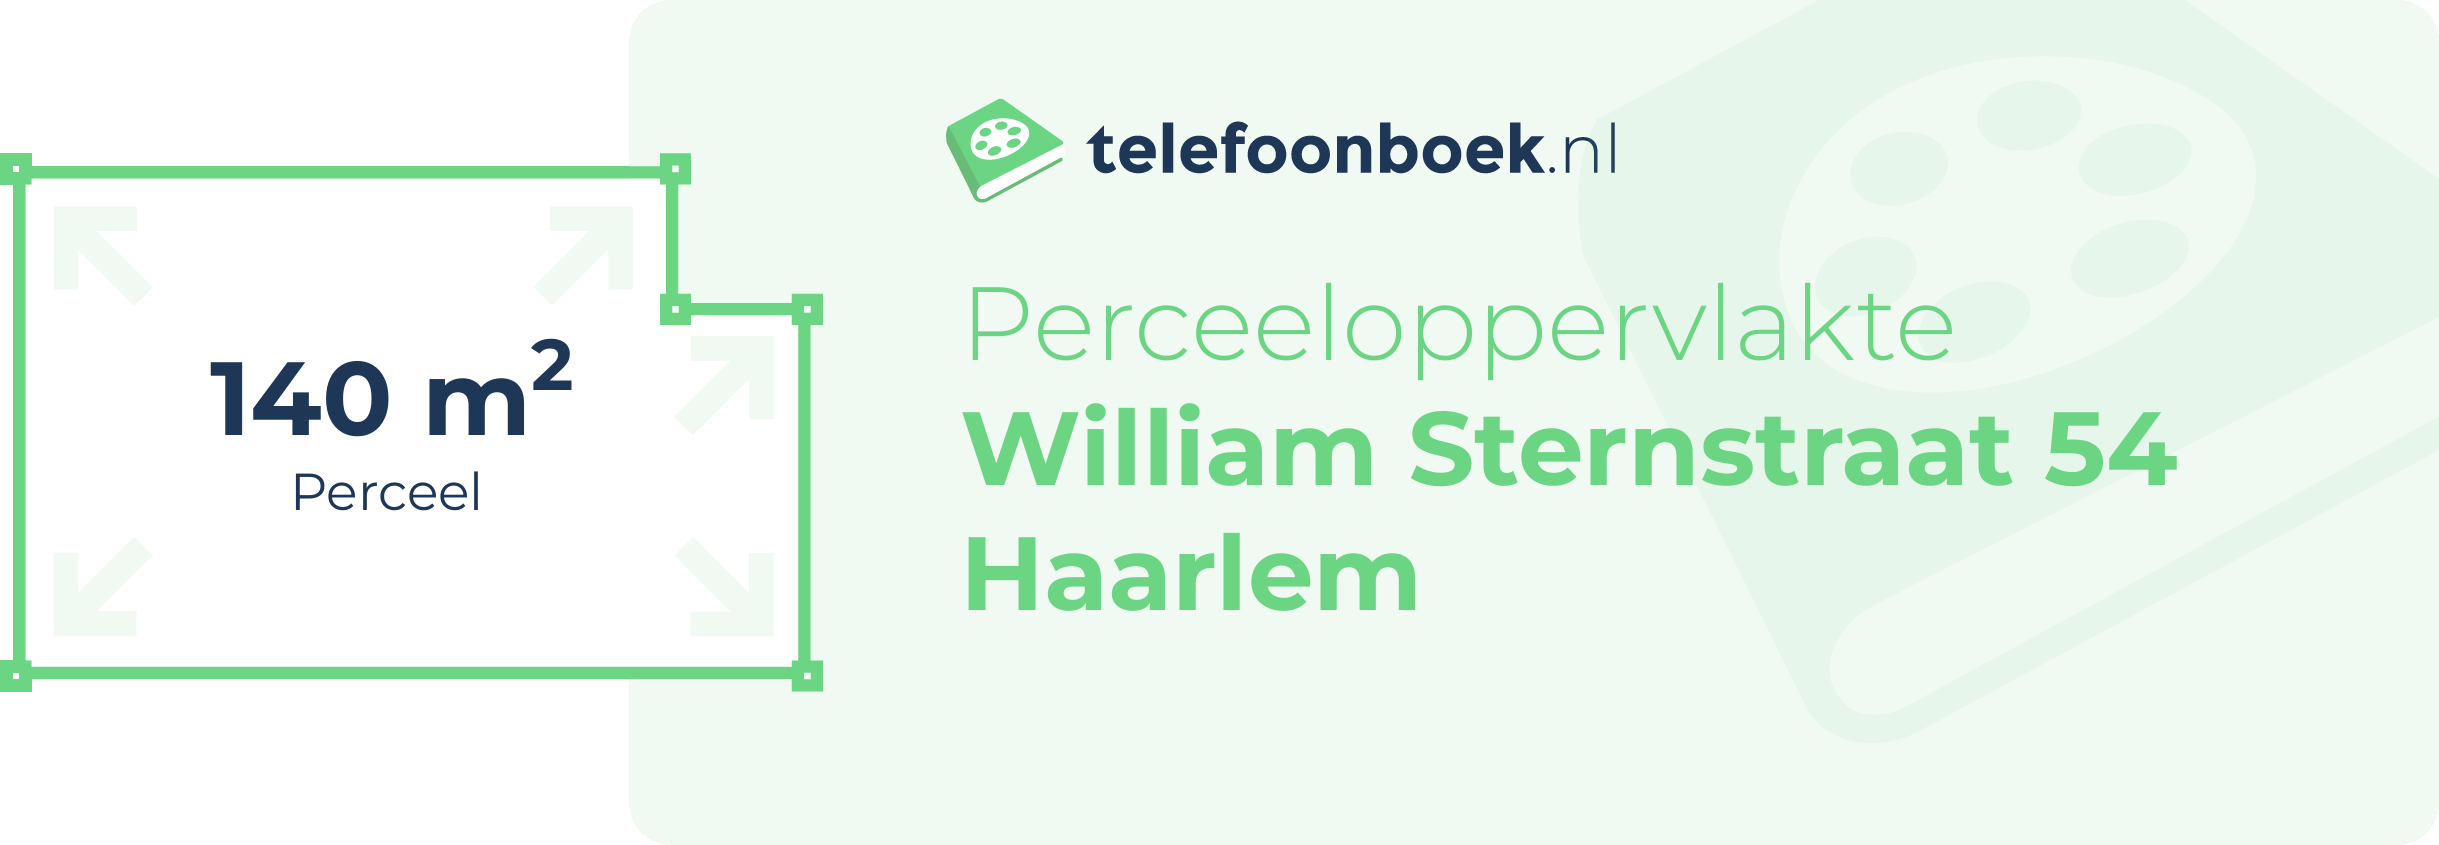 Perceeloppervlakte William Sternstraat 54 Haarlem